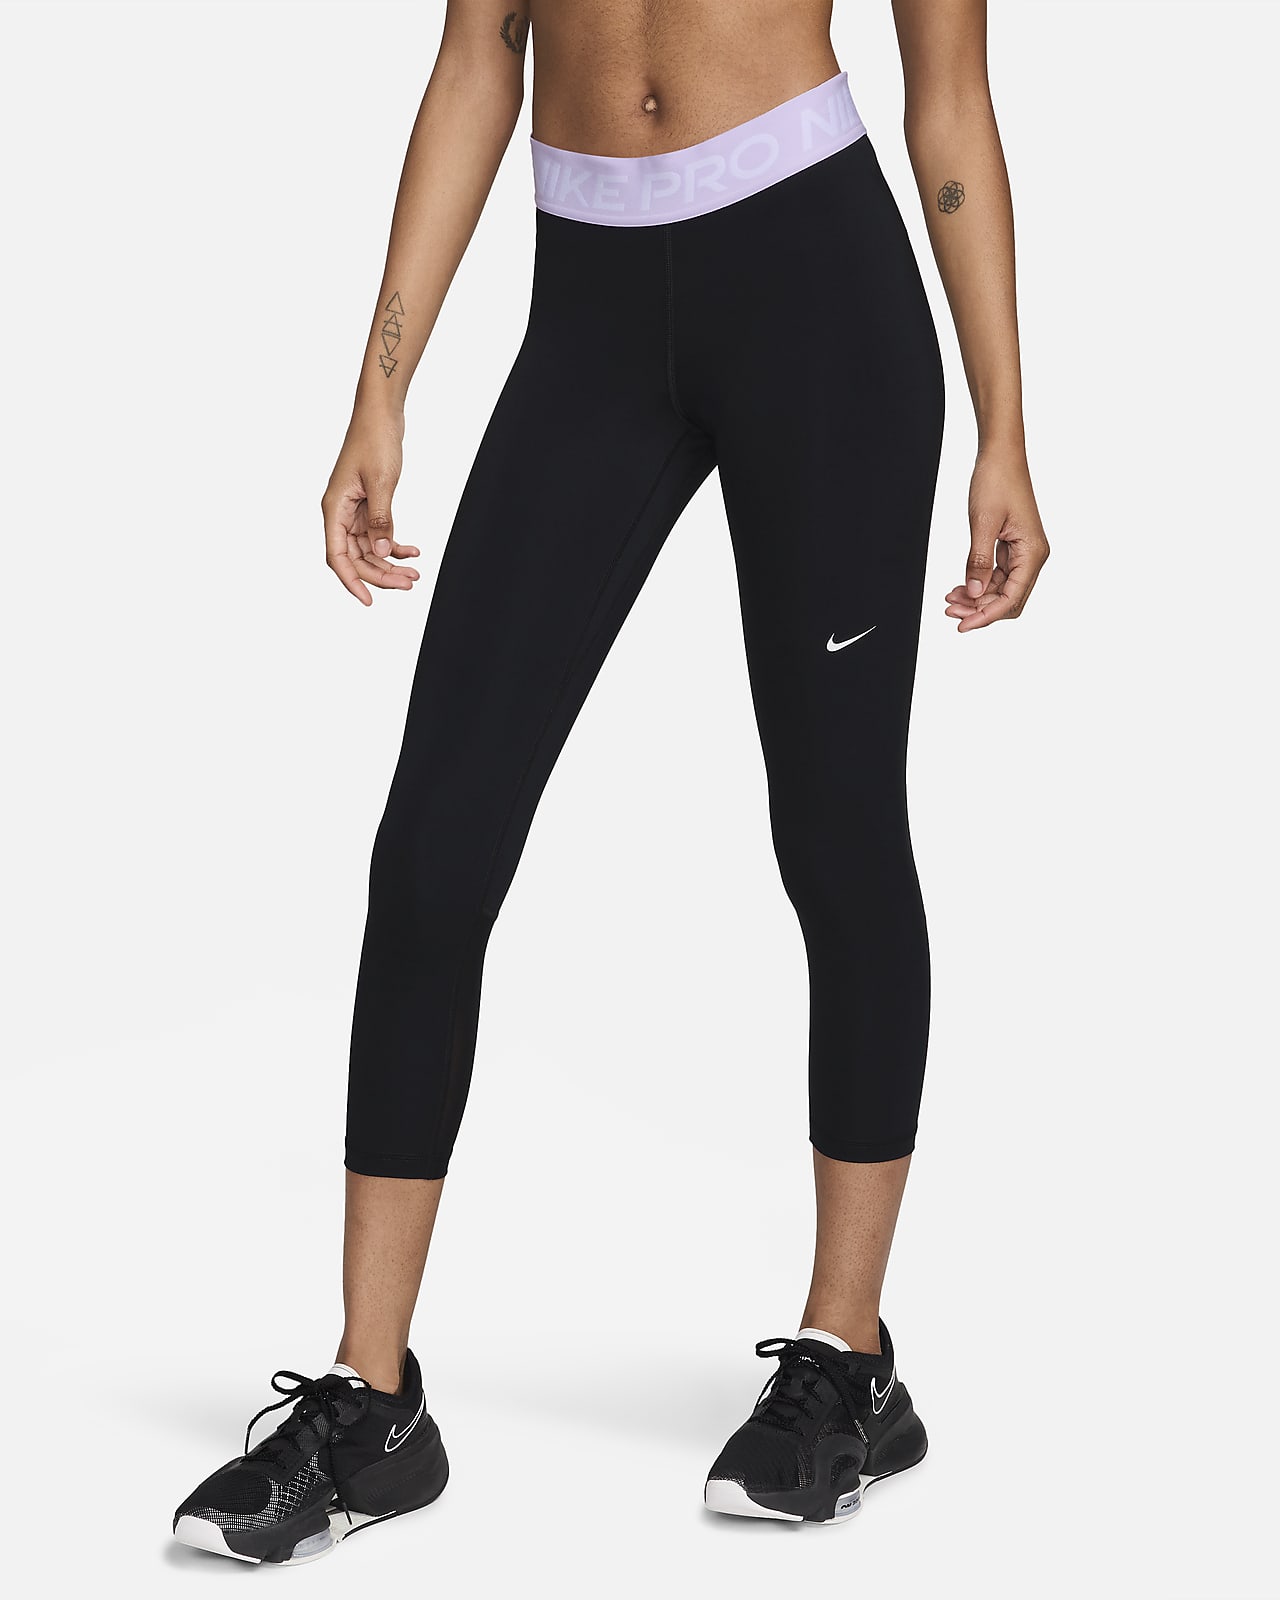 Nike Women's Pro 365 Tights (Black/White, Size L)